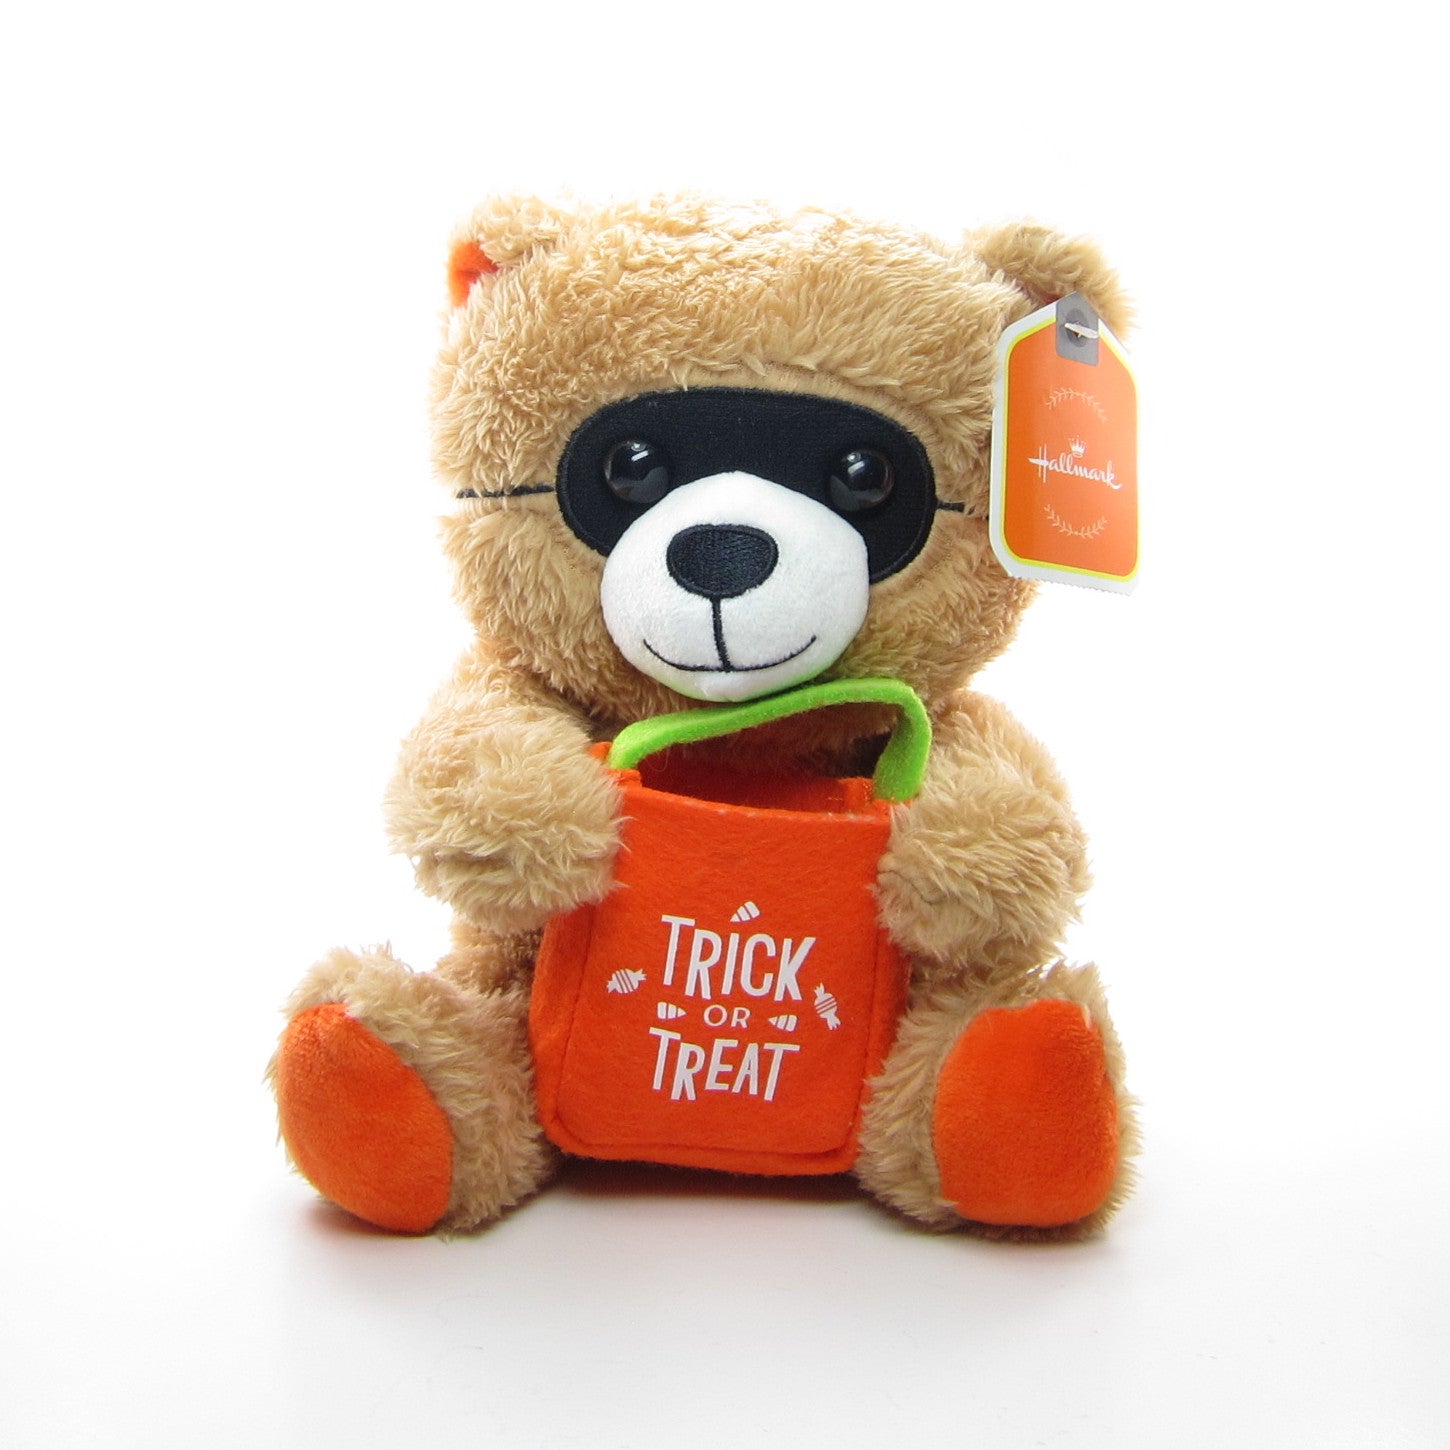 Hallmark plush Halloween bear stuffed animal with trick or treat bag